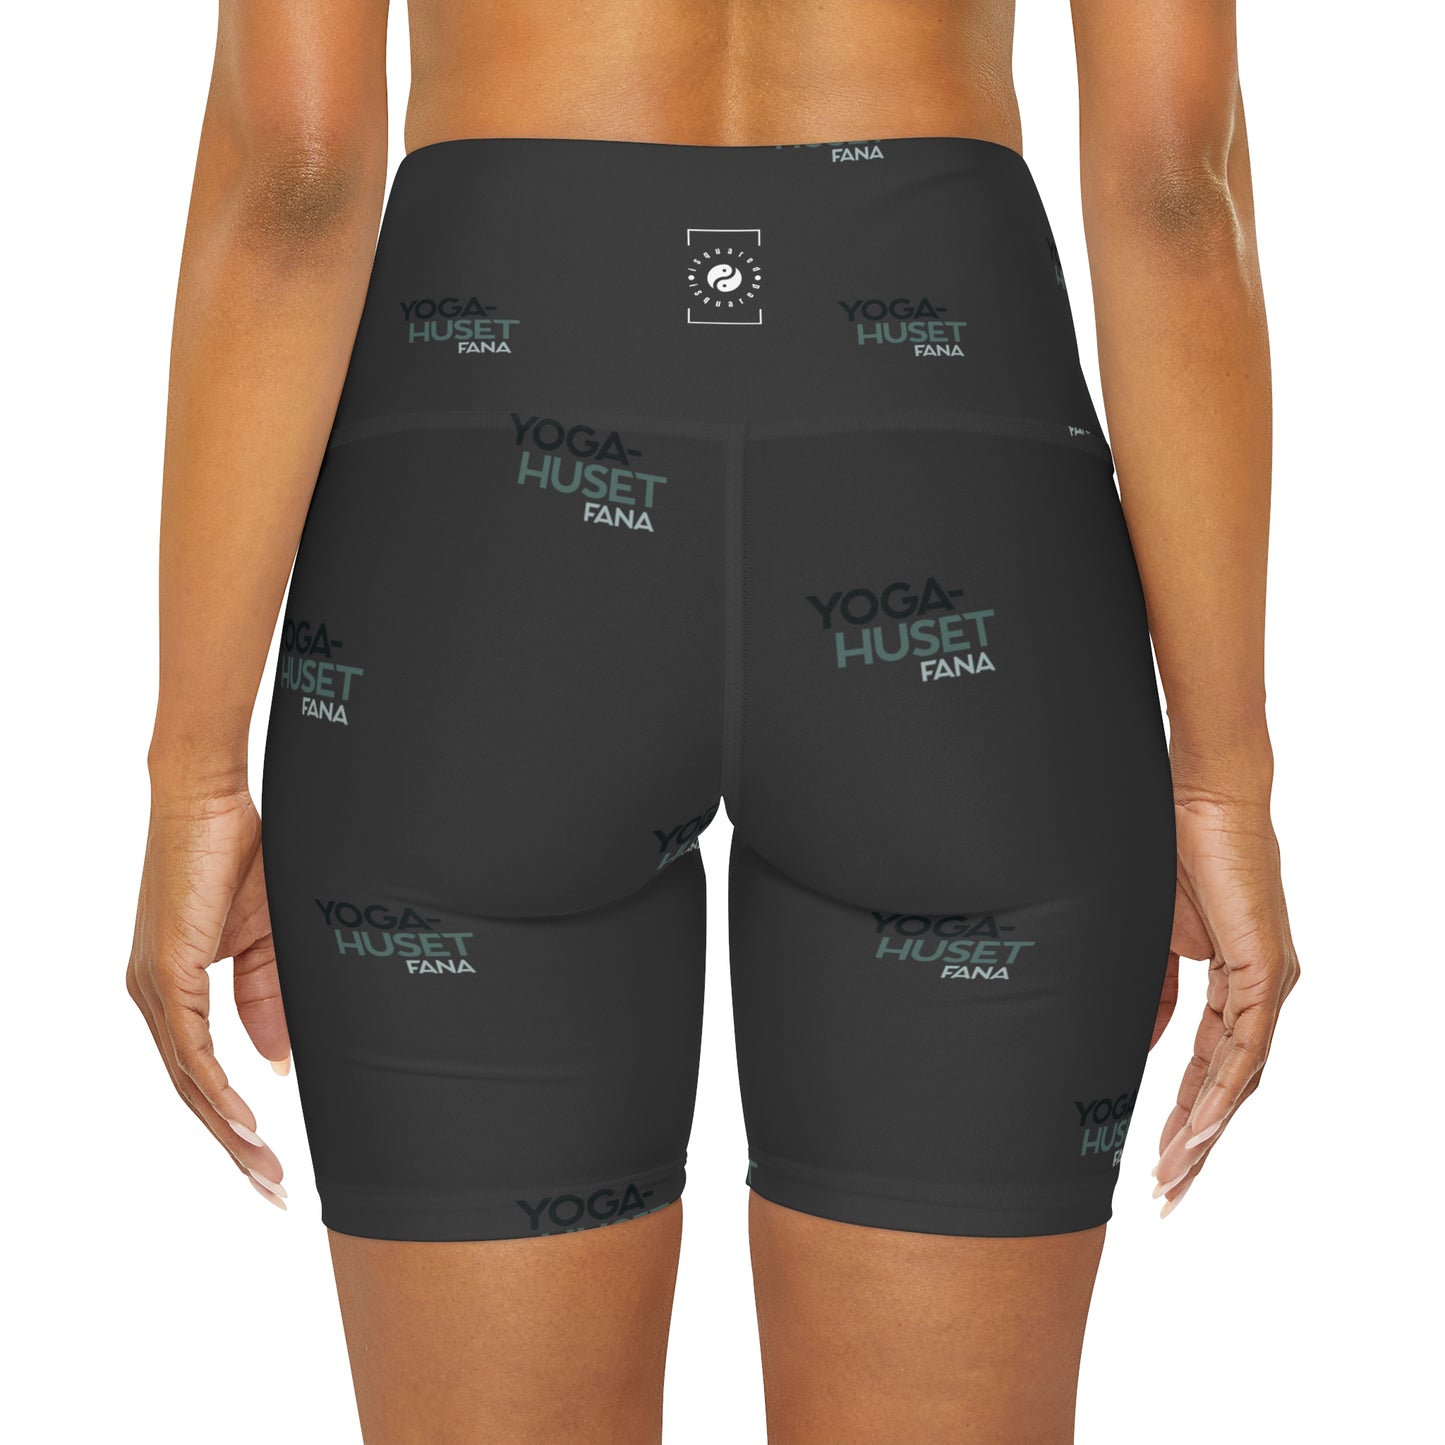 Yoga Huset Fana Collab 01 - shorts